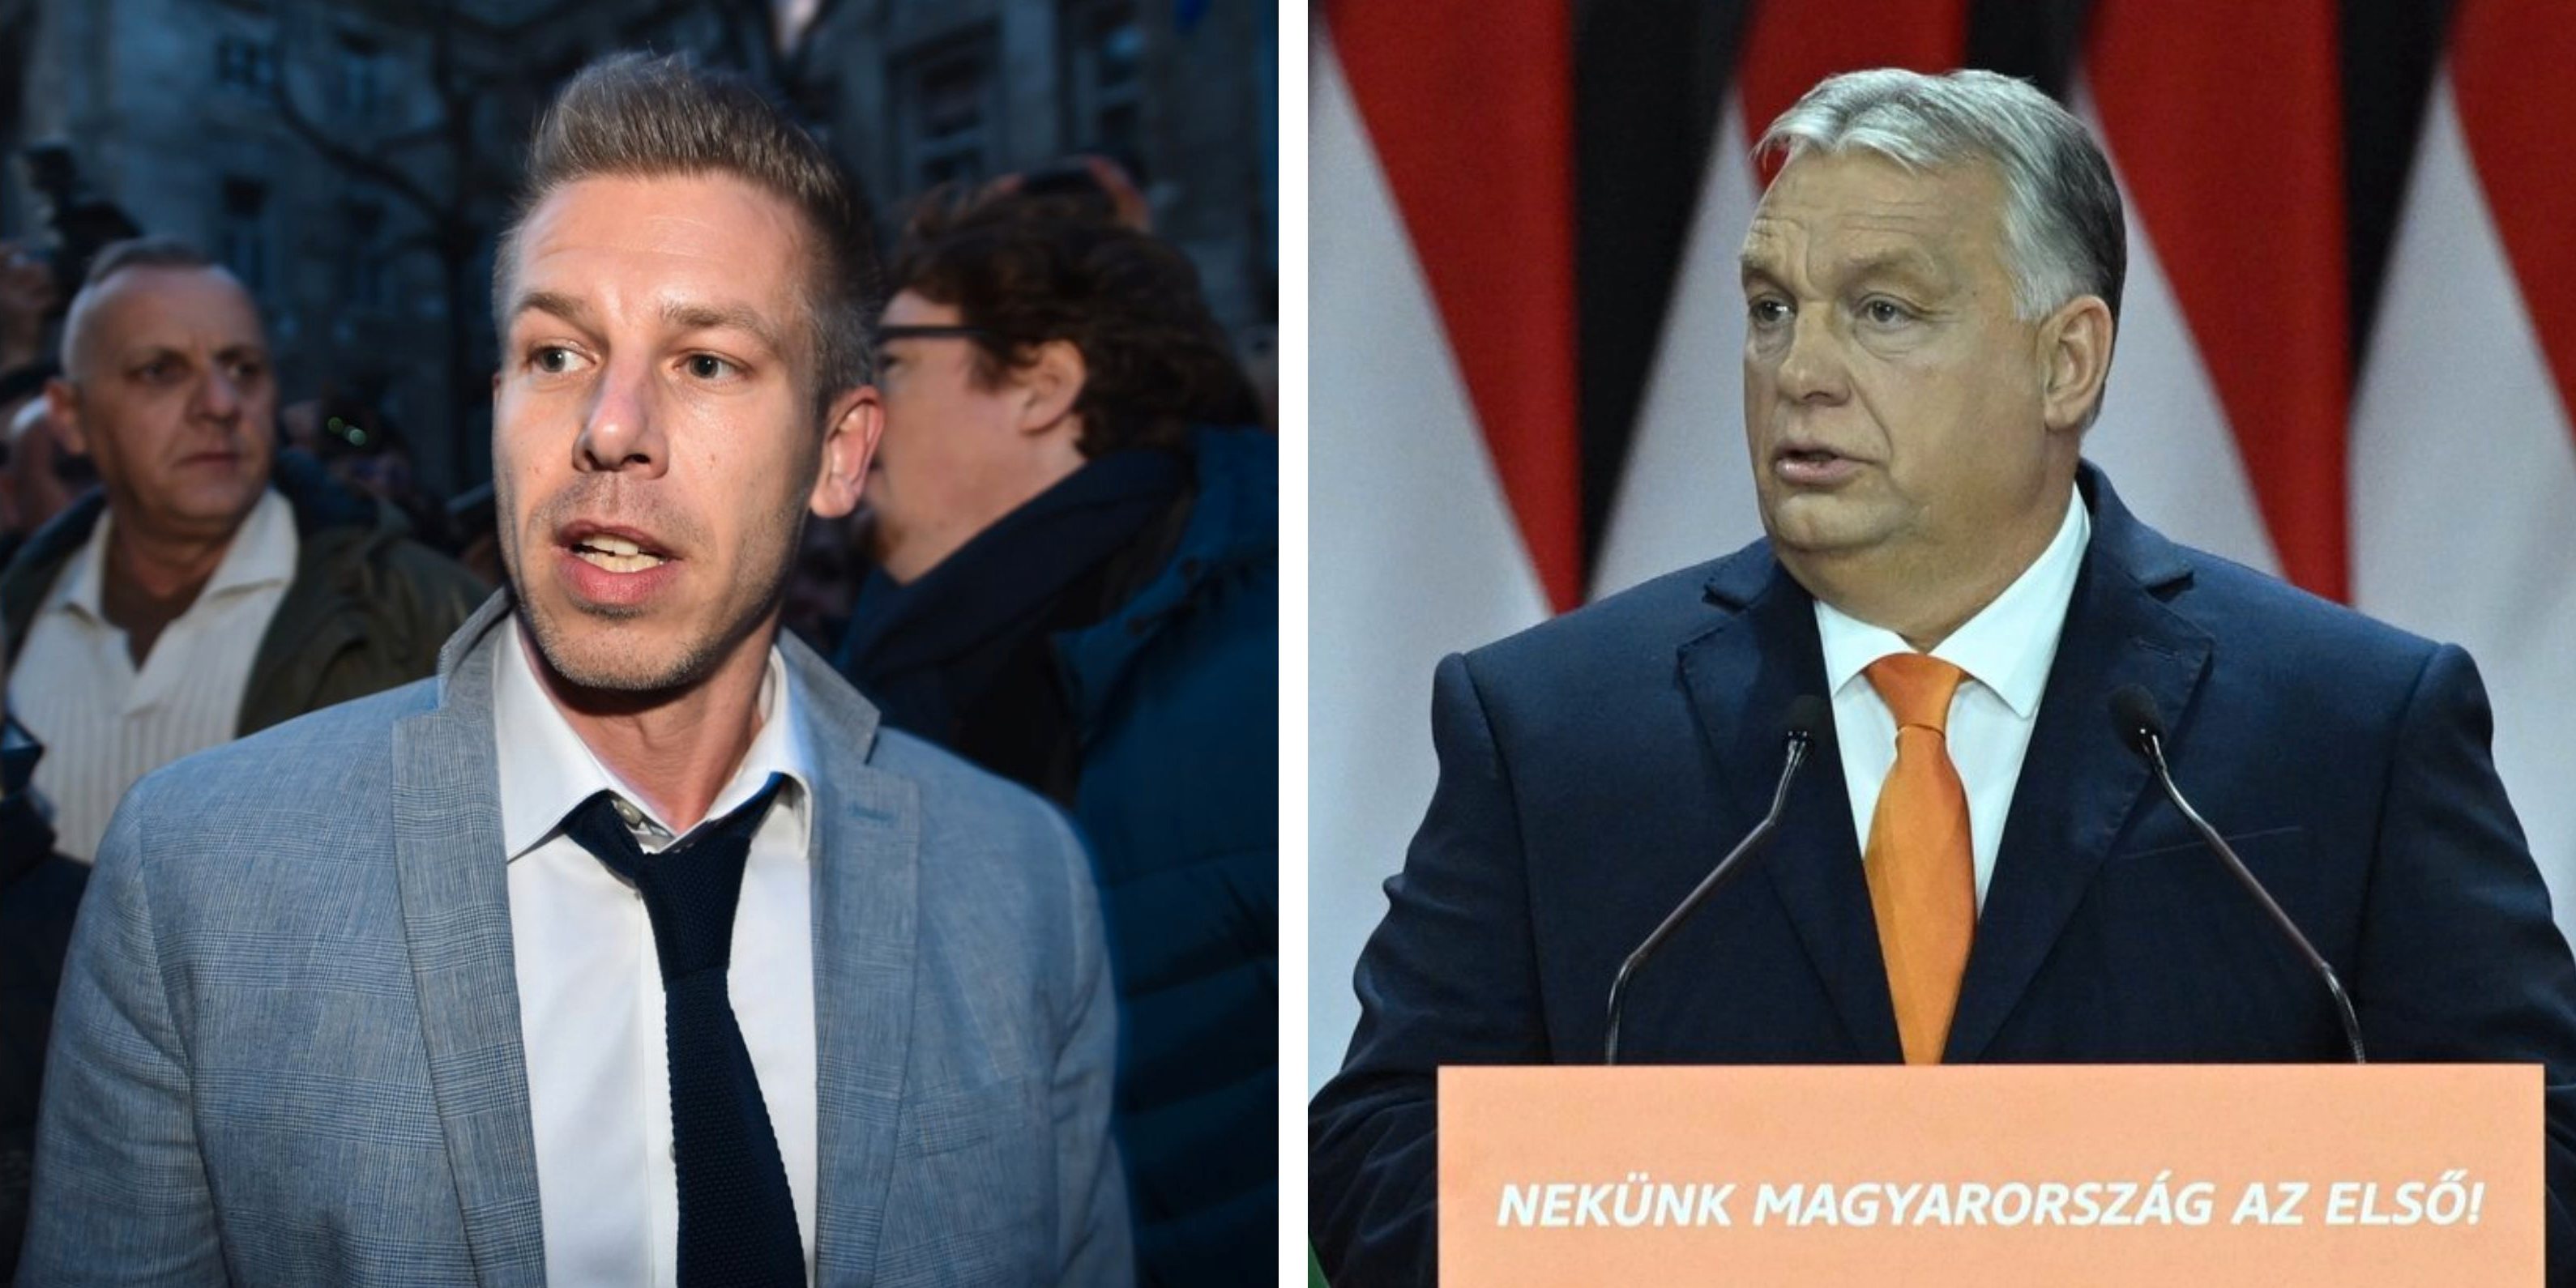 Péter Magyar está a consolidar-se como um dos principais opositores a Viktor Orbán